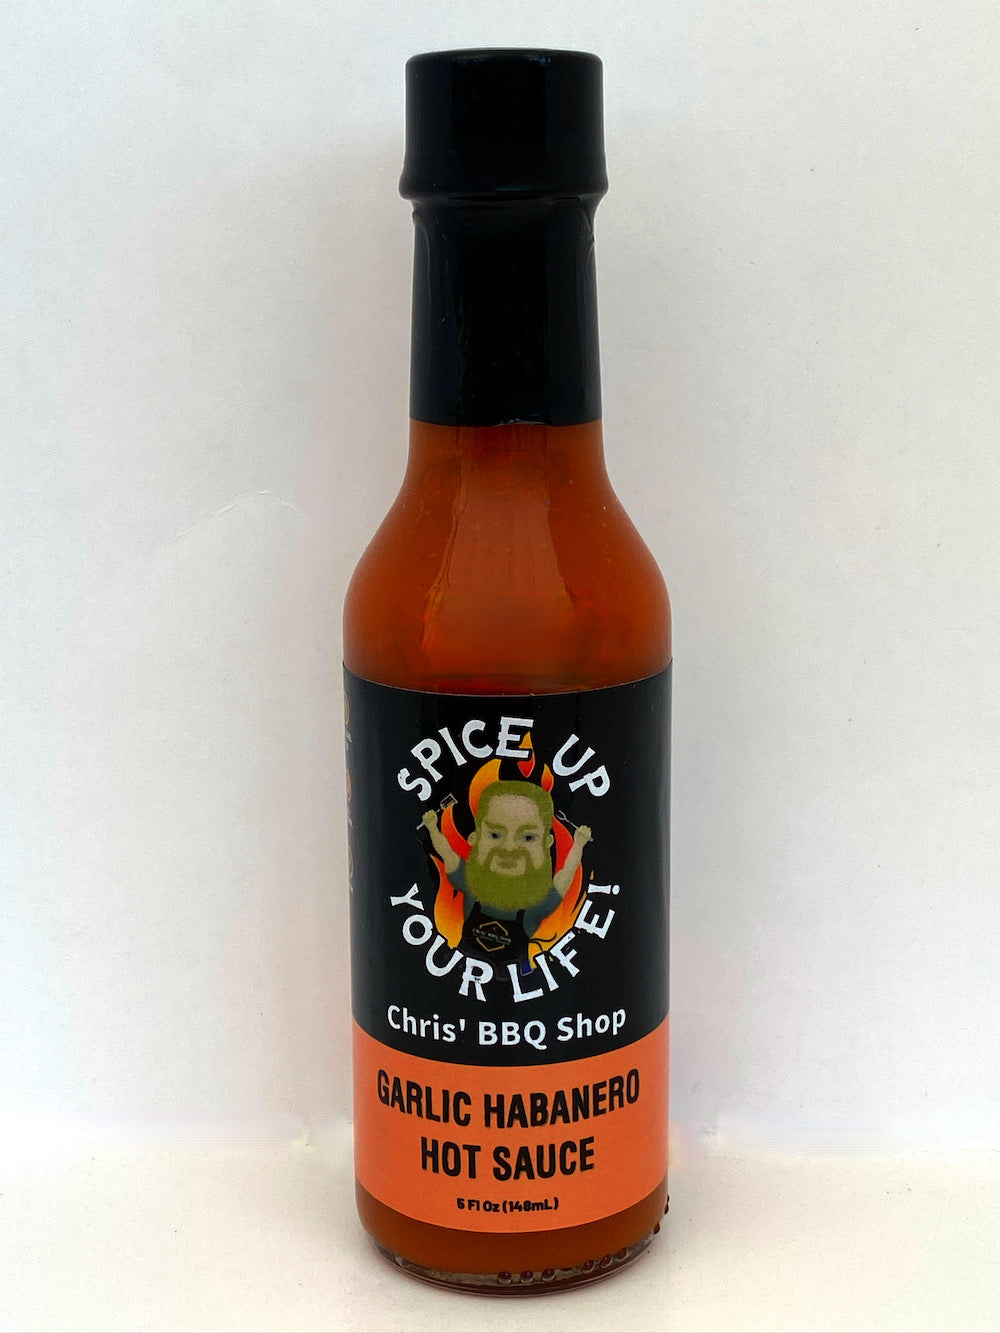 Chris BBQ Shop Garlic Habanero Hot Sauce (5oz.)